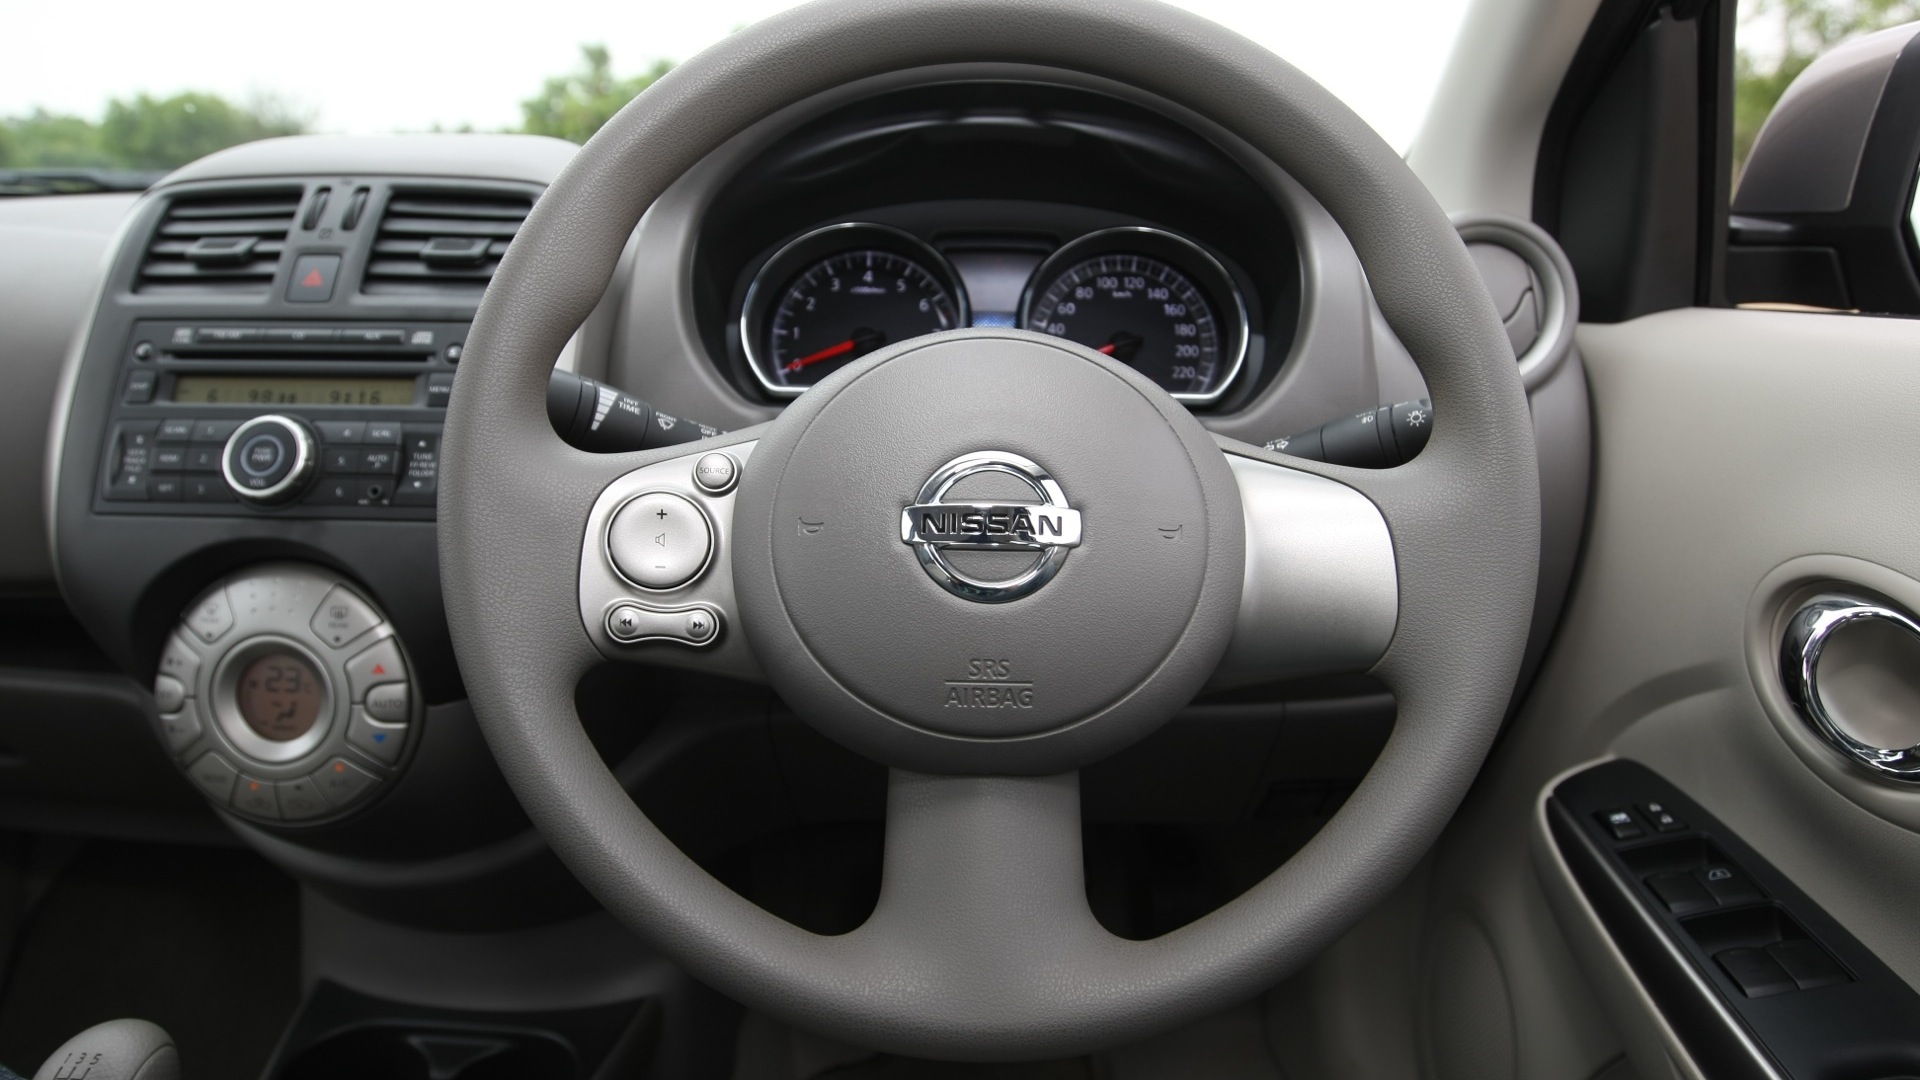 Nissan-Sunny-2013-XV-Interior Car Photos - Overdrive